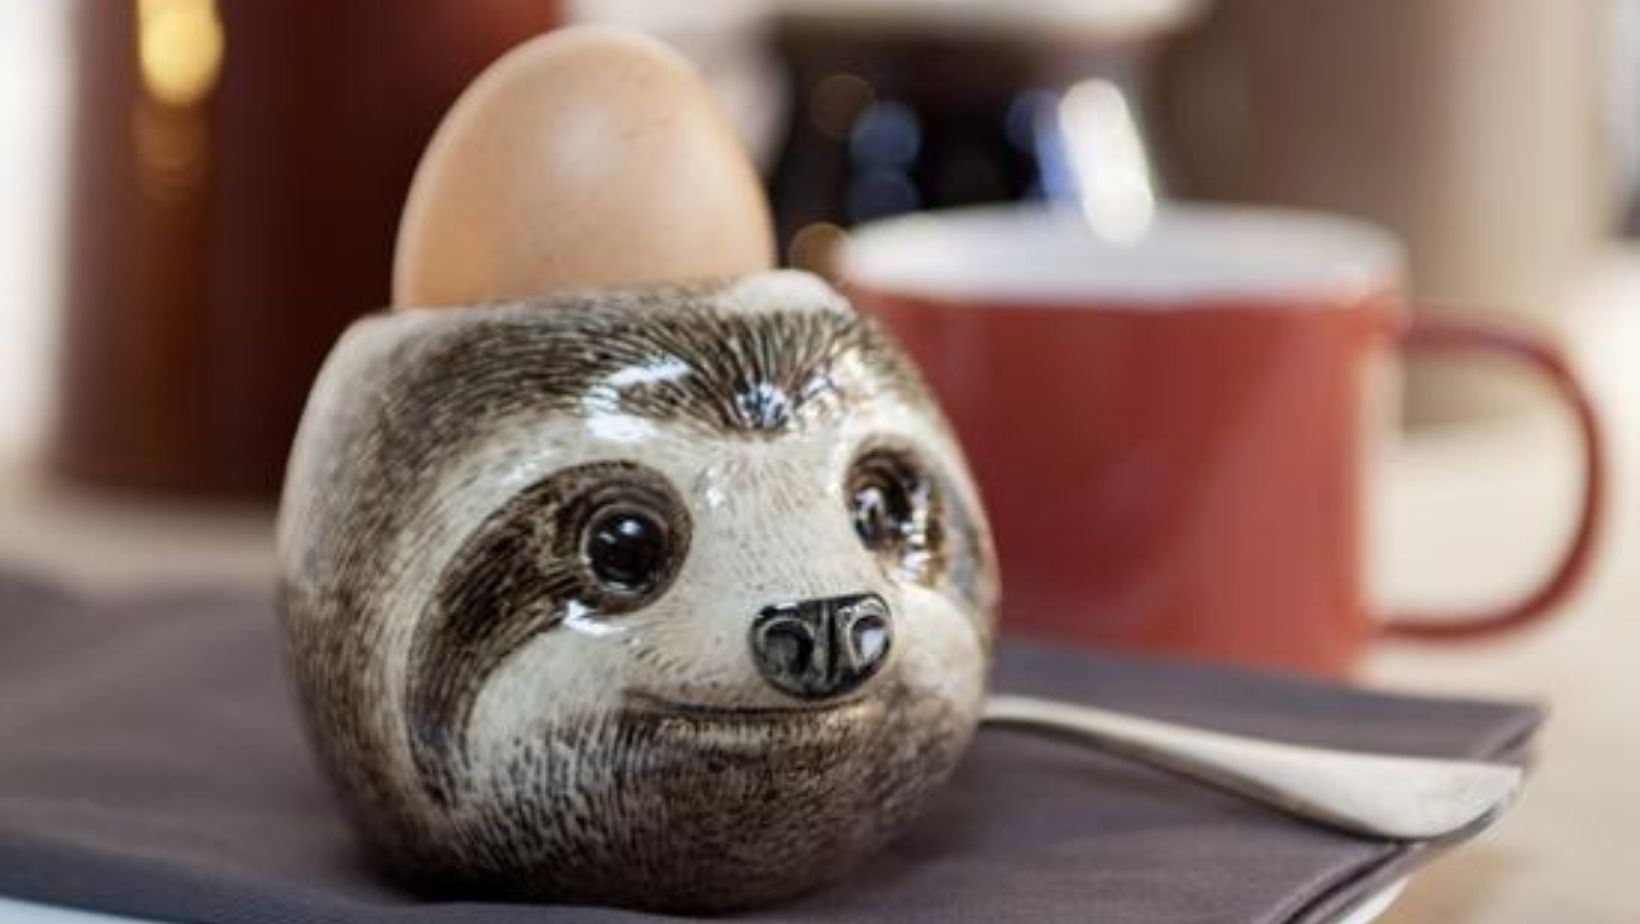 Sloth Egg Cup